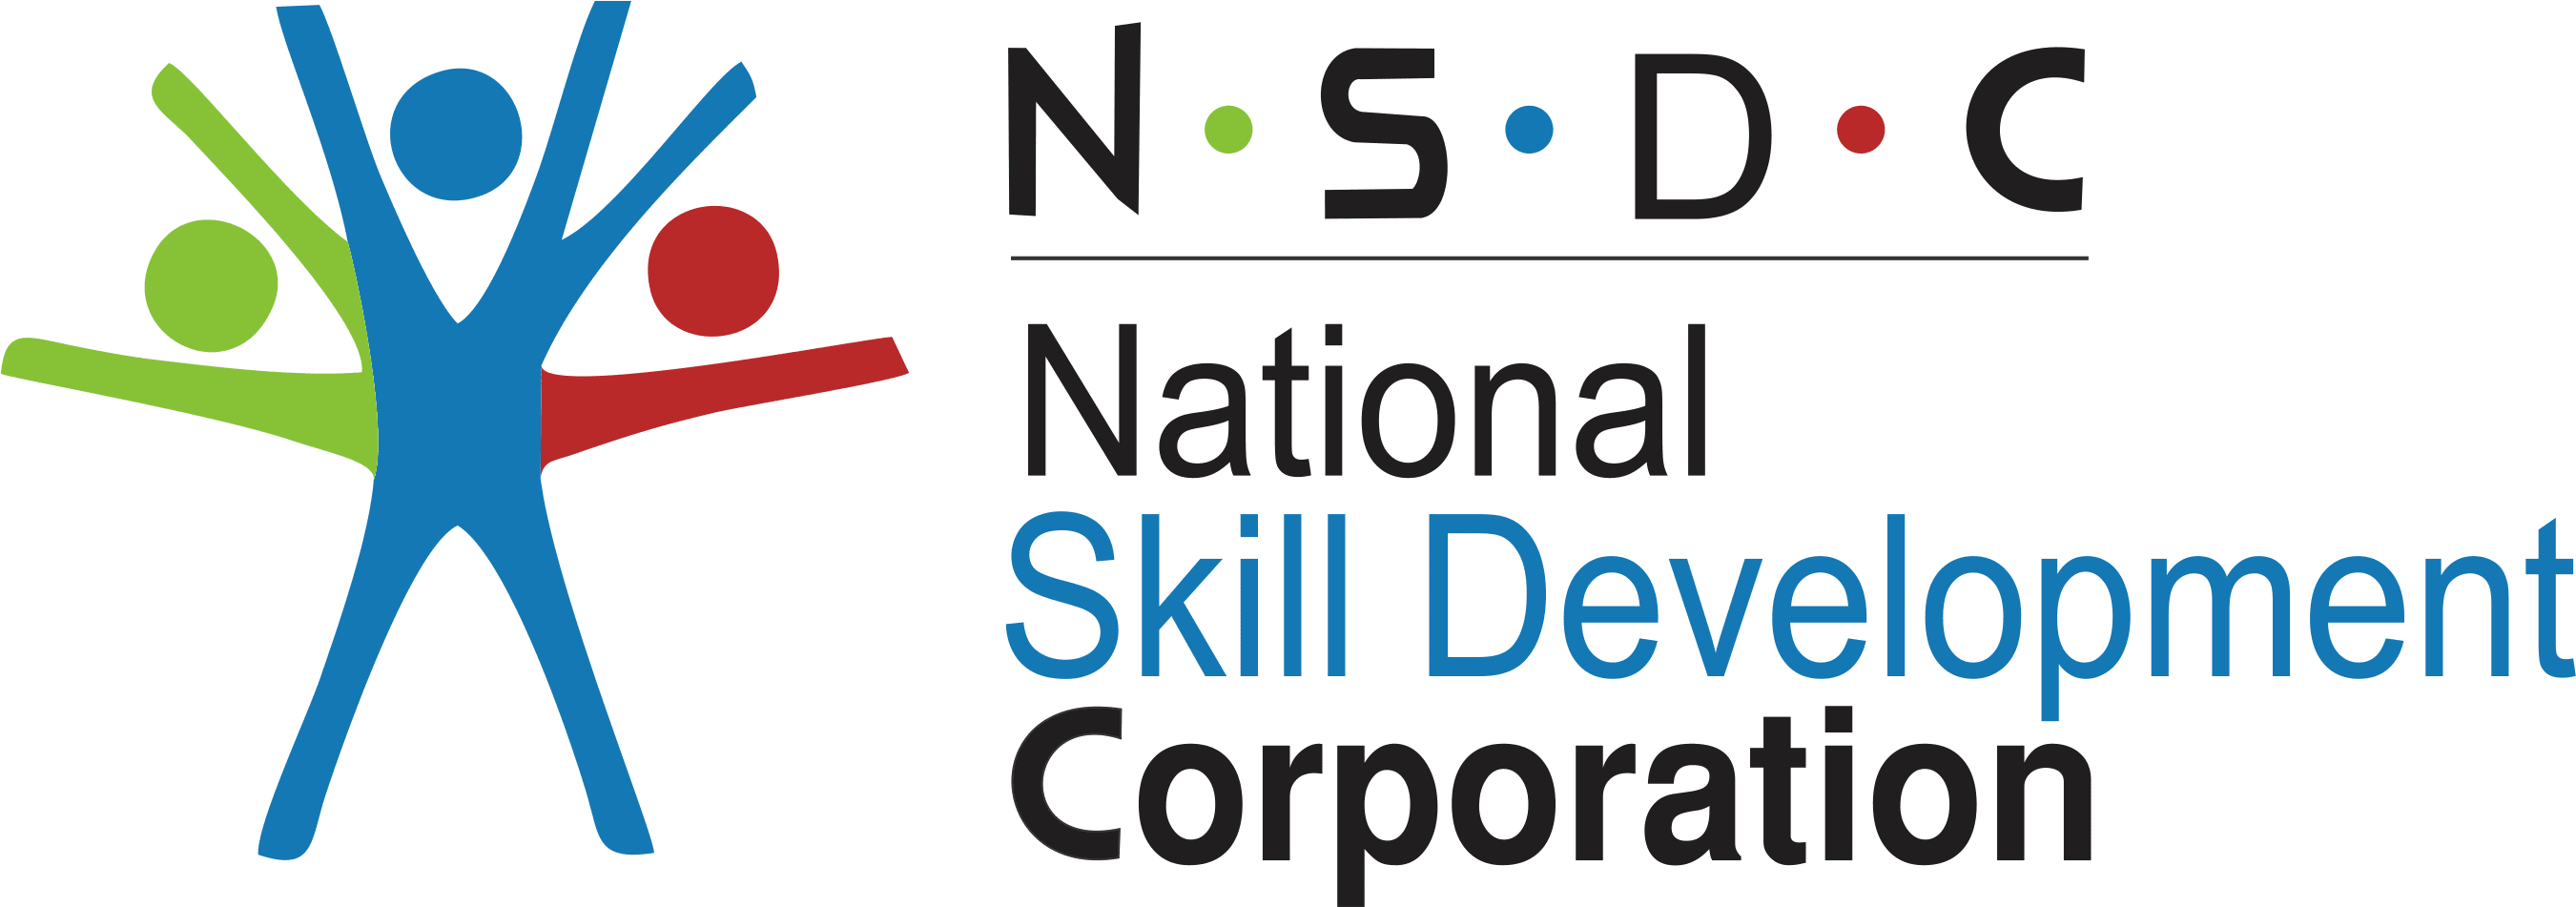 nsdc logo png 3